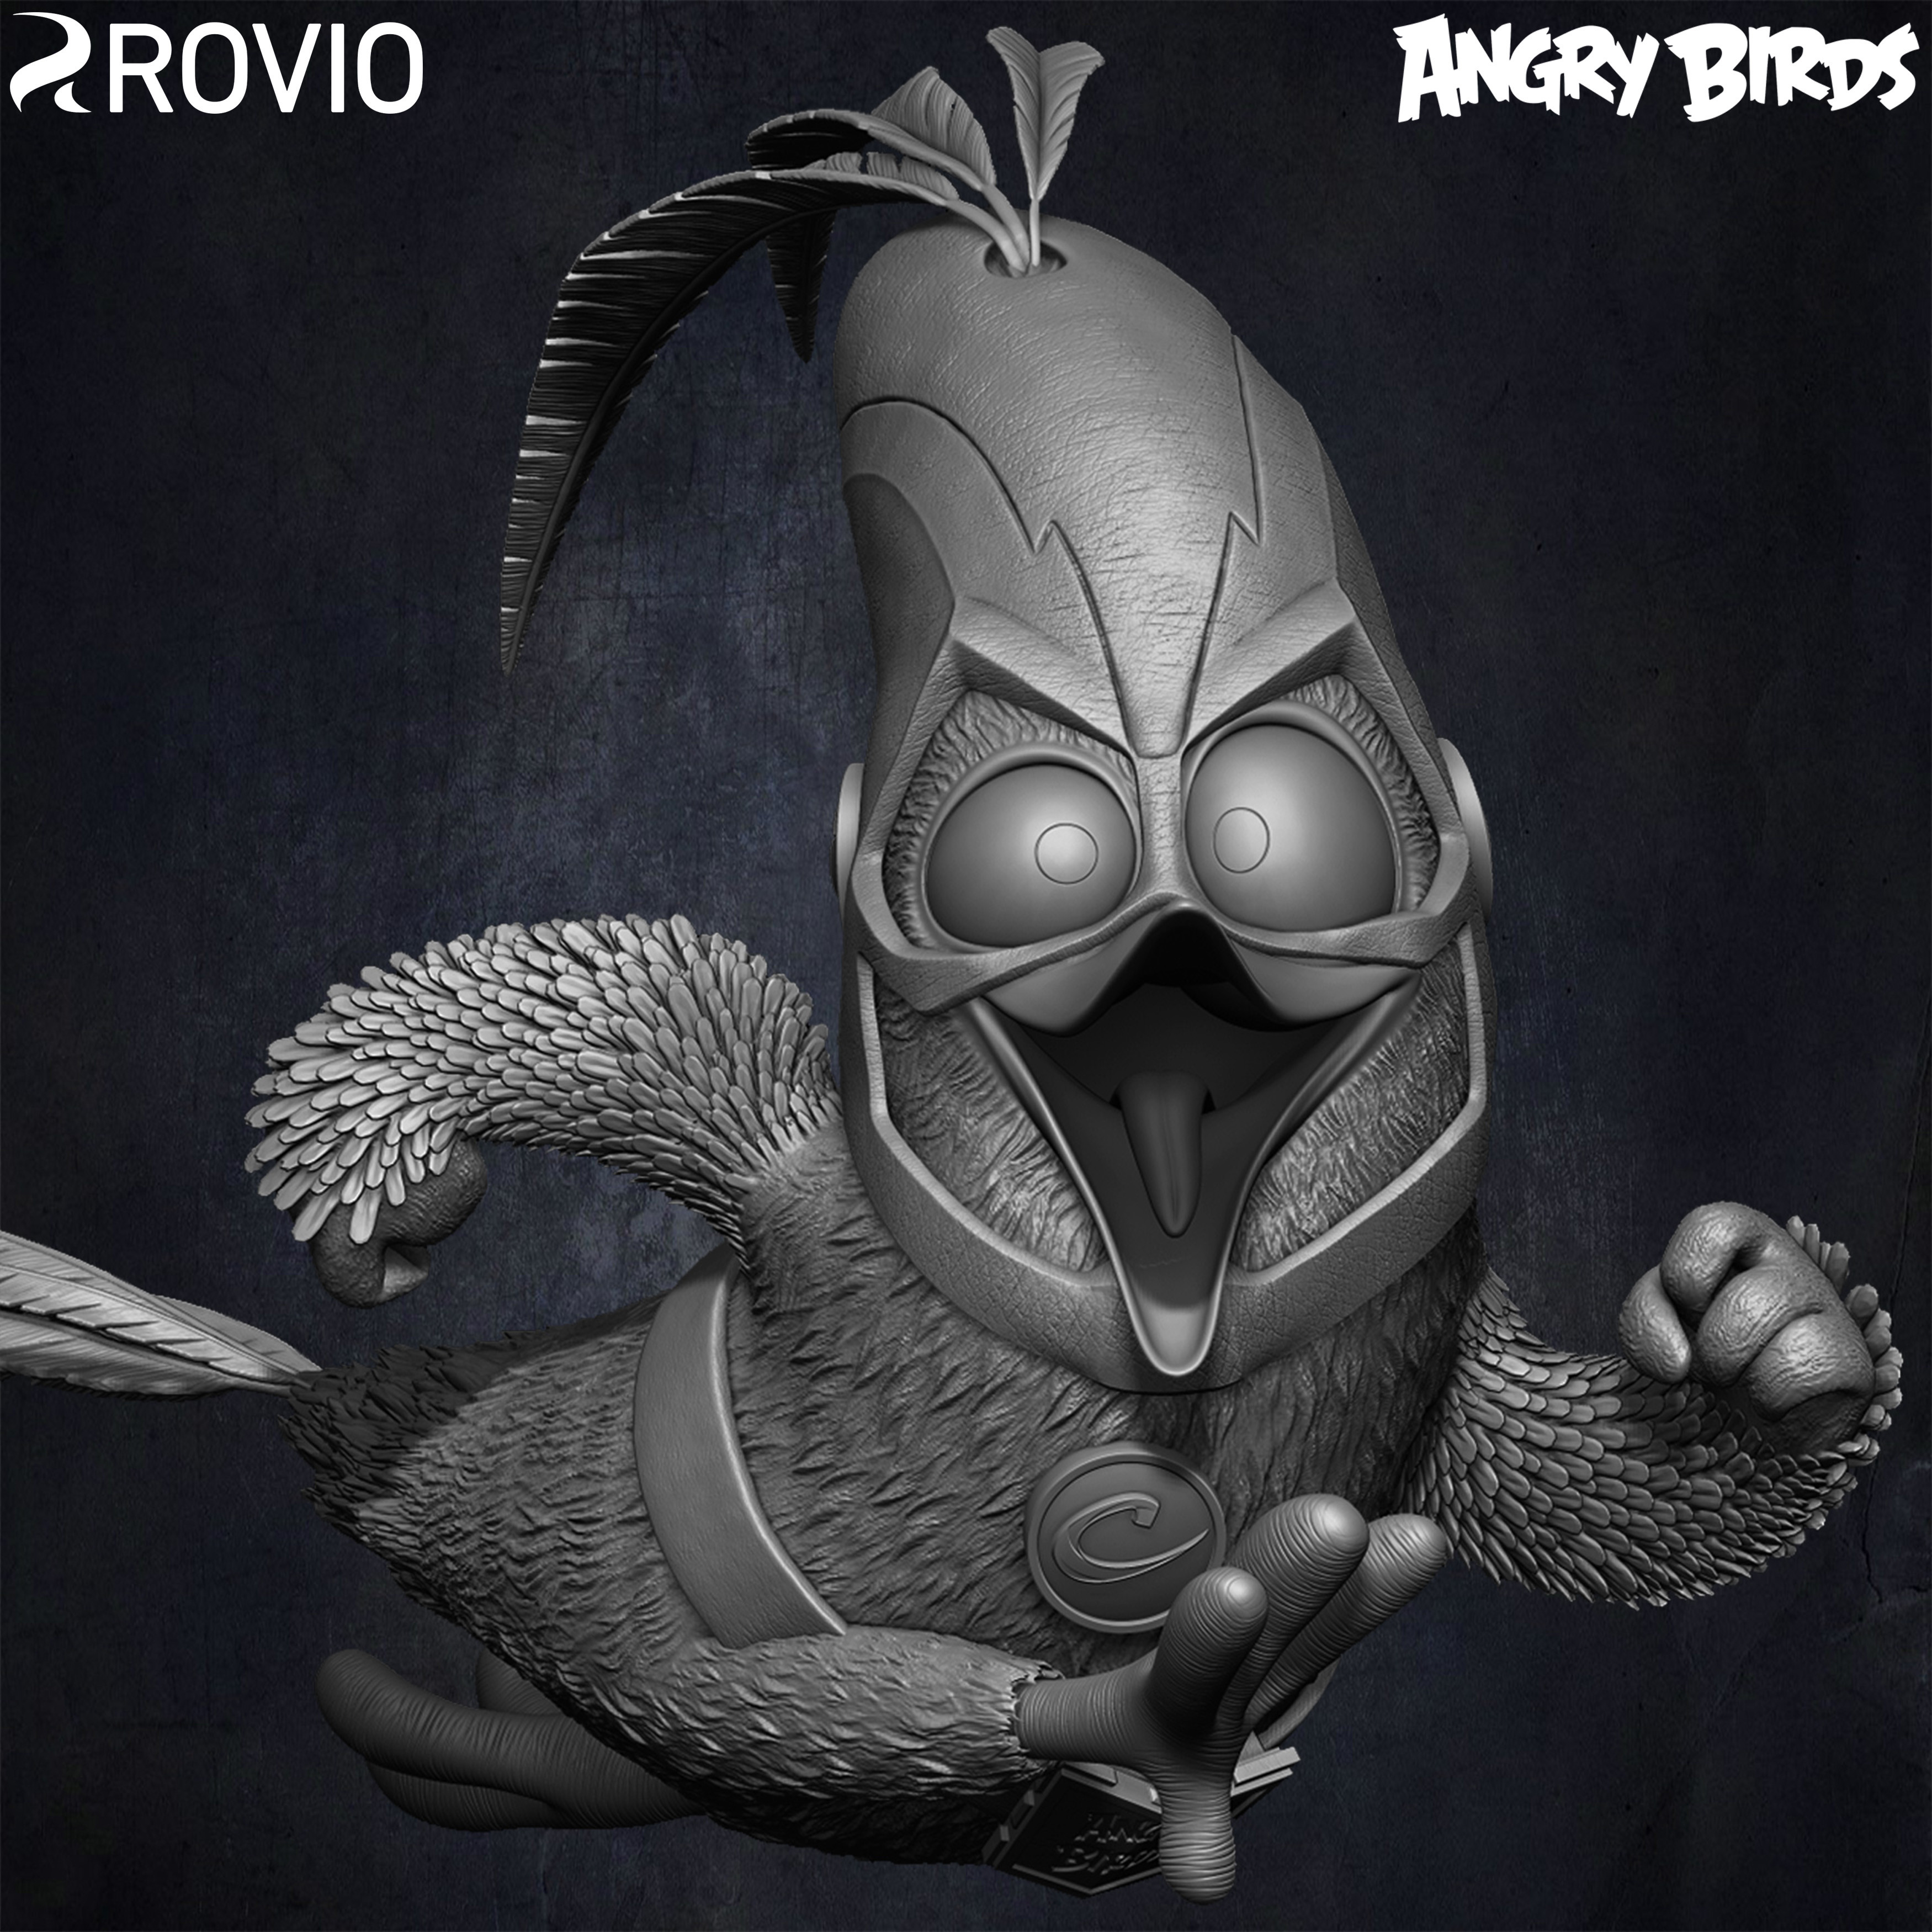 Chuck Running The Flash Angry Birds Movie 02 Rovio sculpted by Yacine BRINIS 001